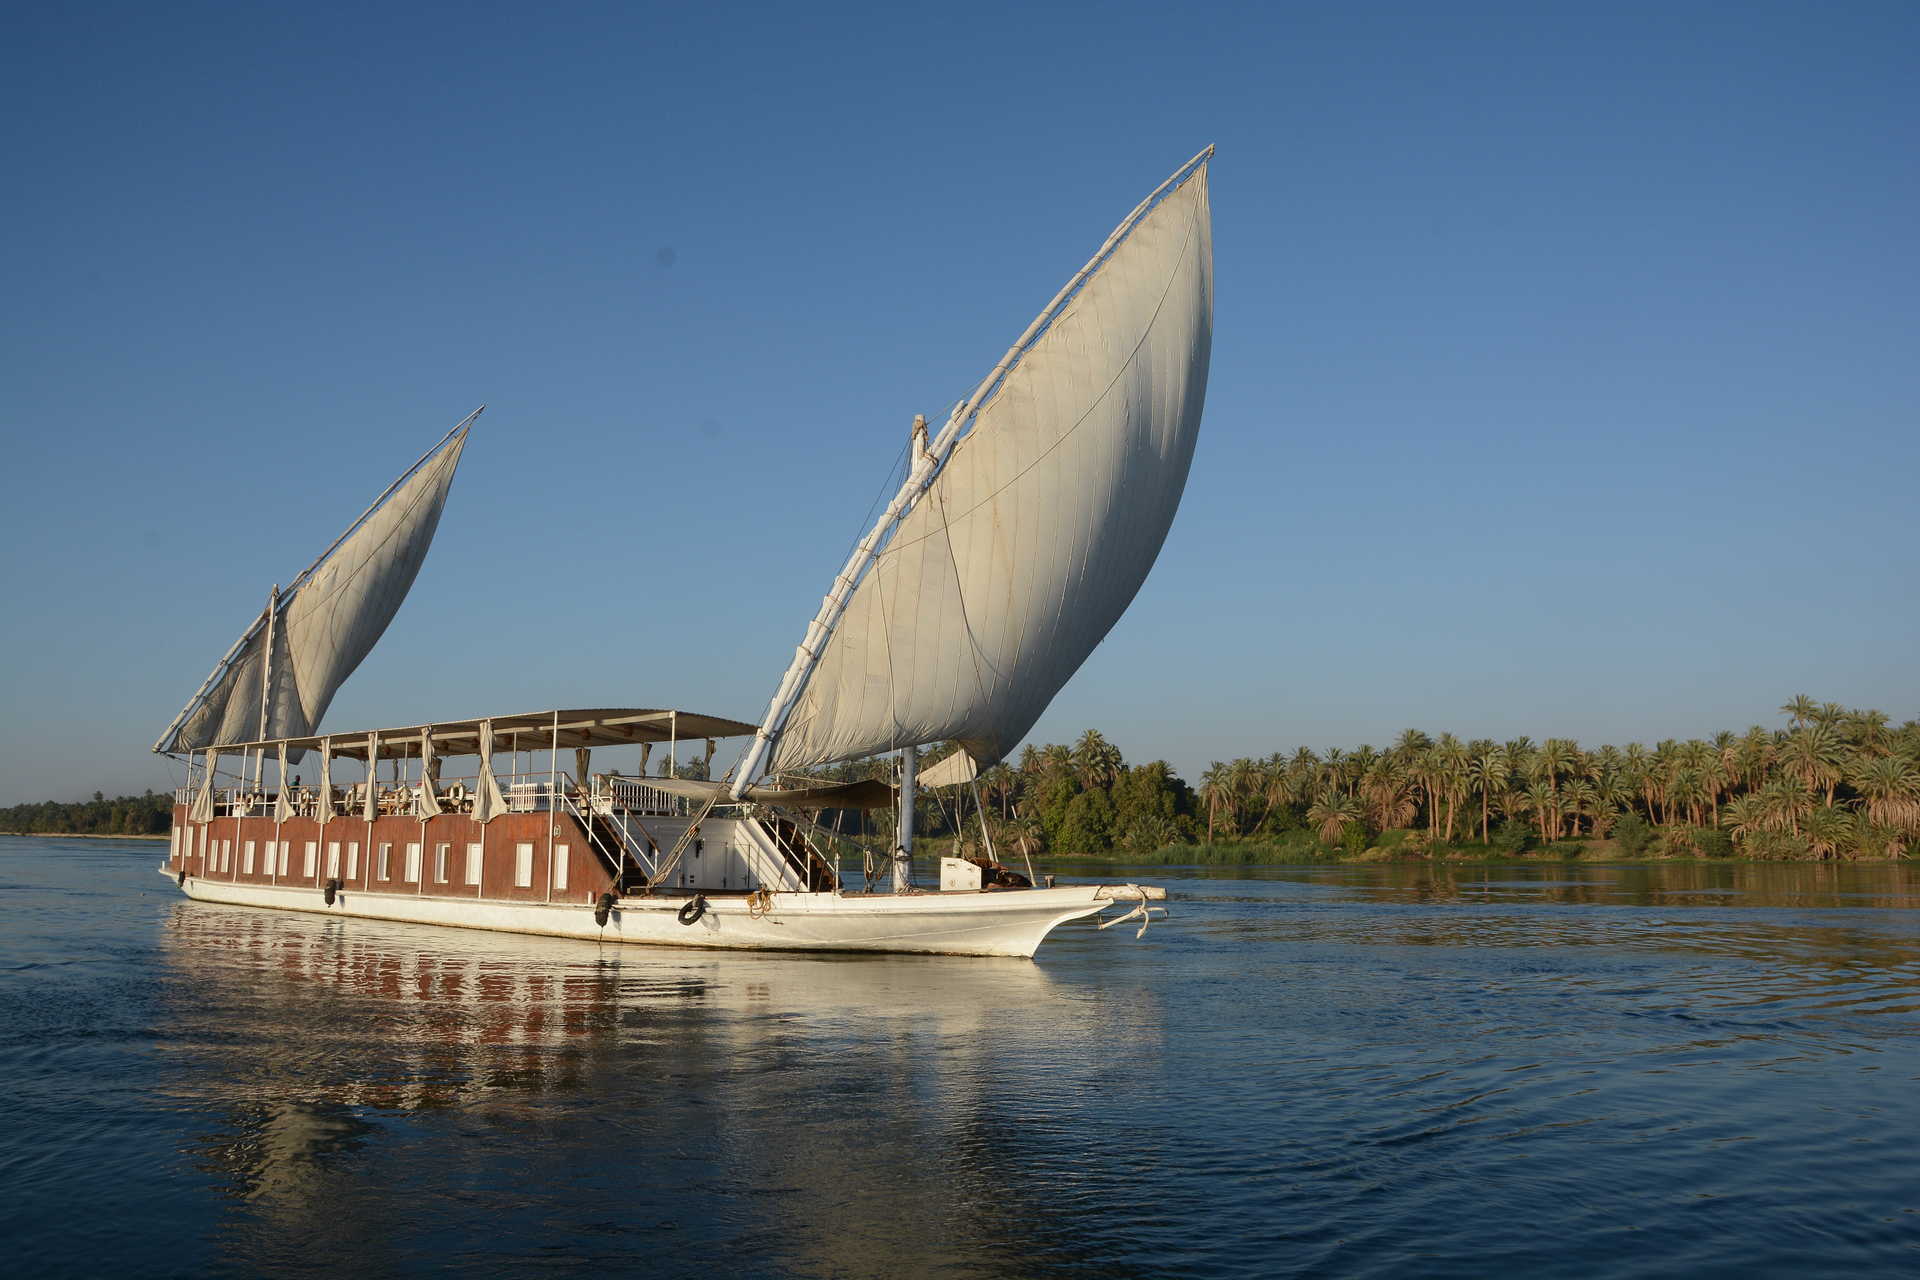 Voyage découverte - Le Nil en dahabieh